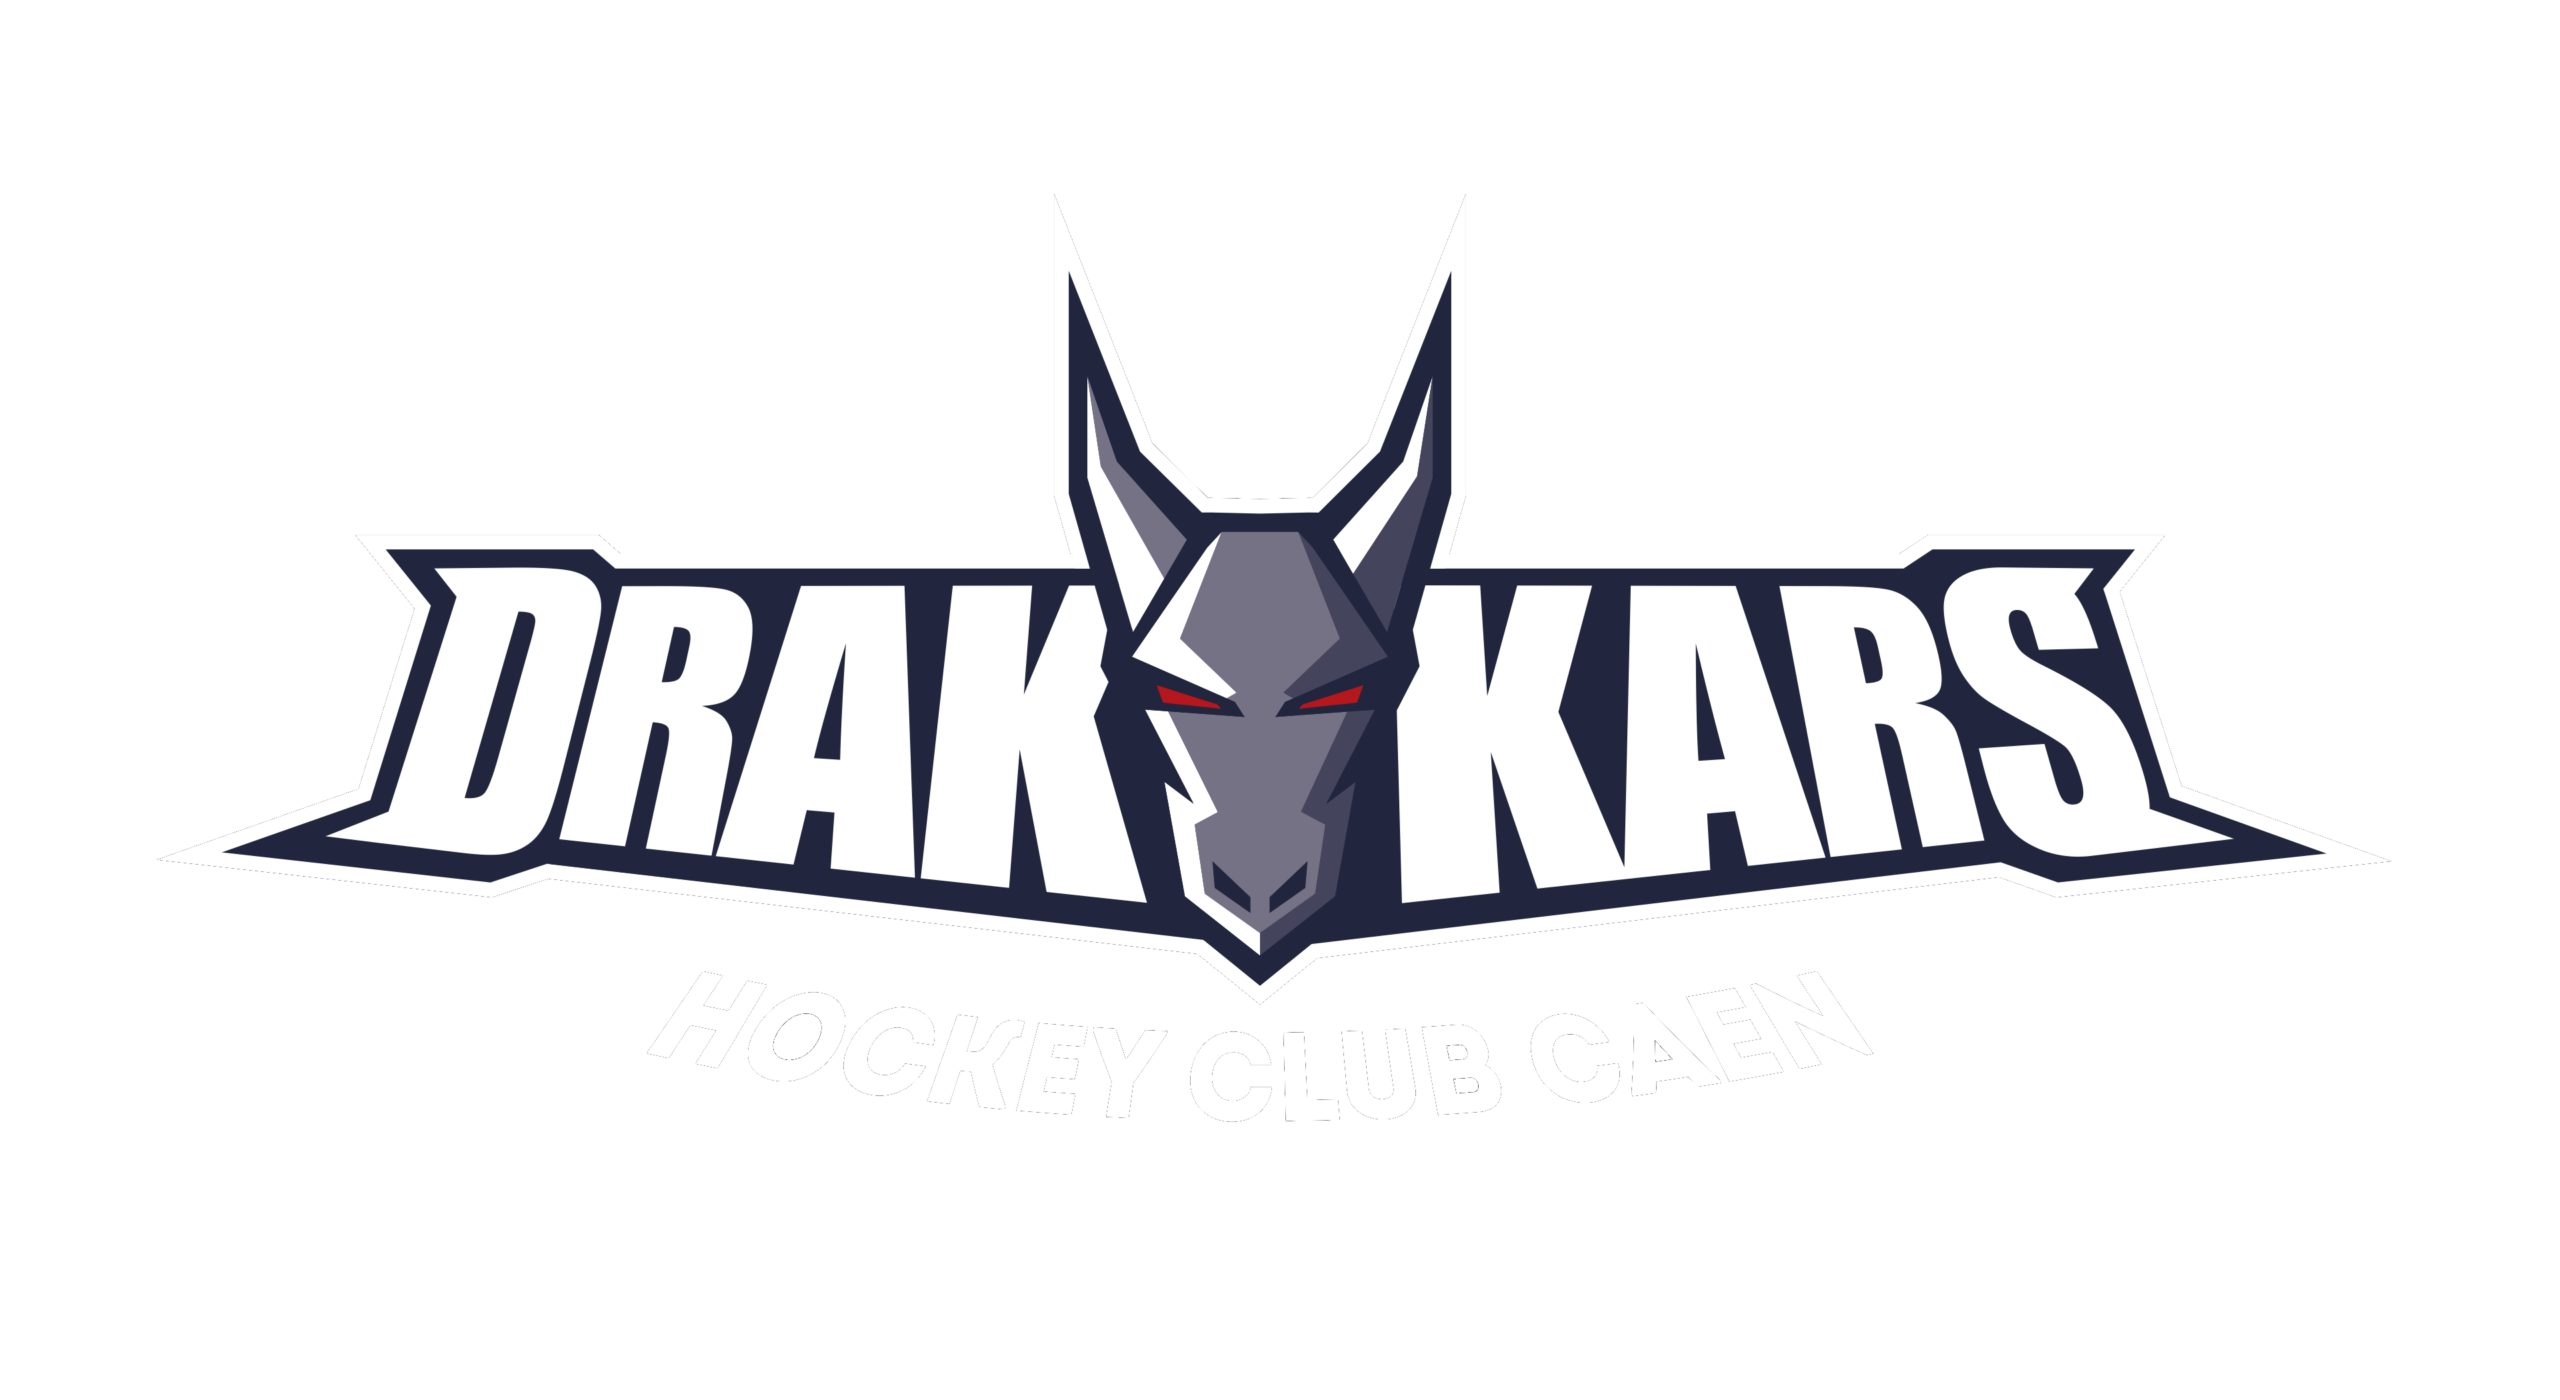 Drakkars hockey club Caen